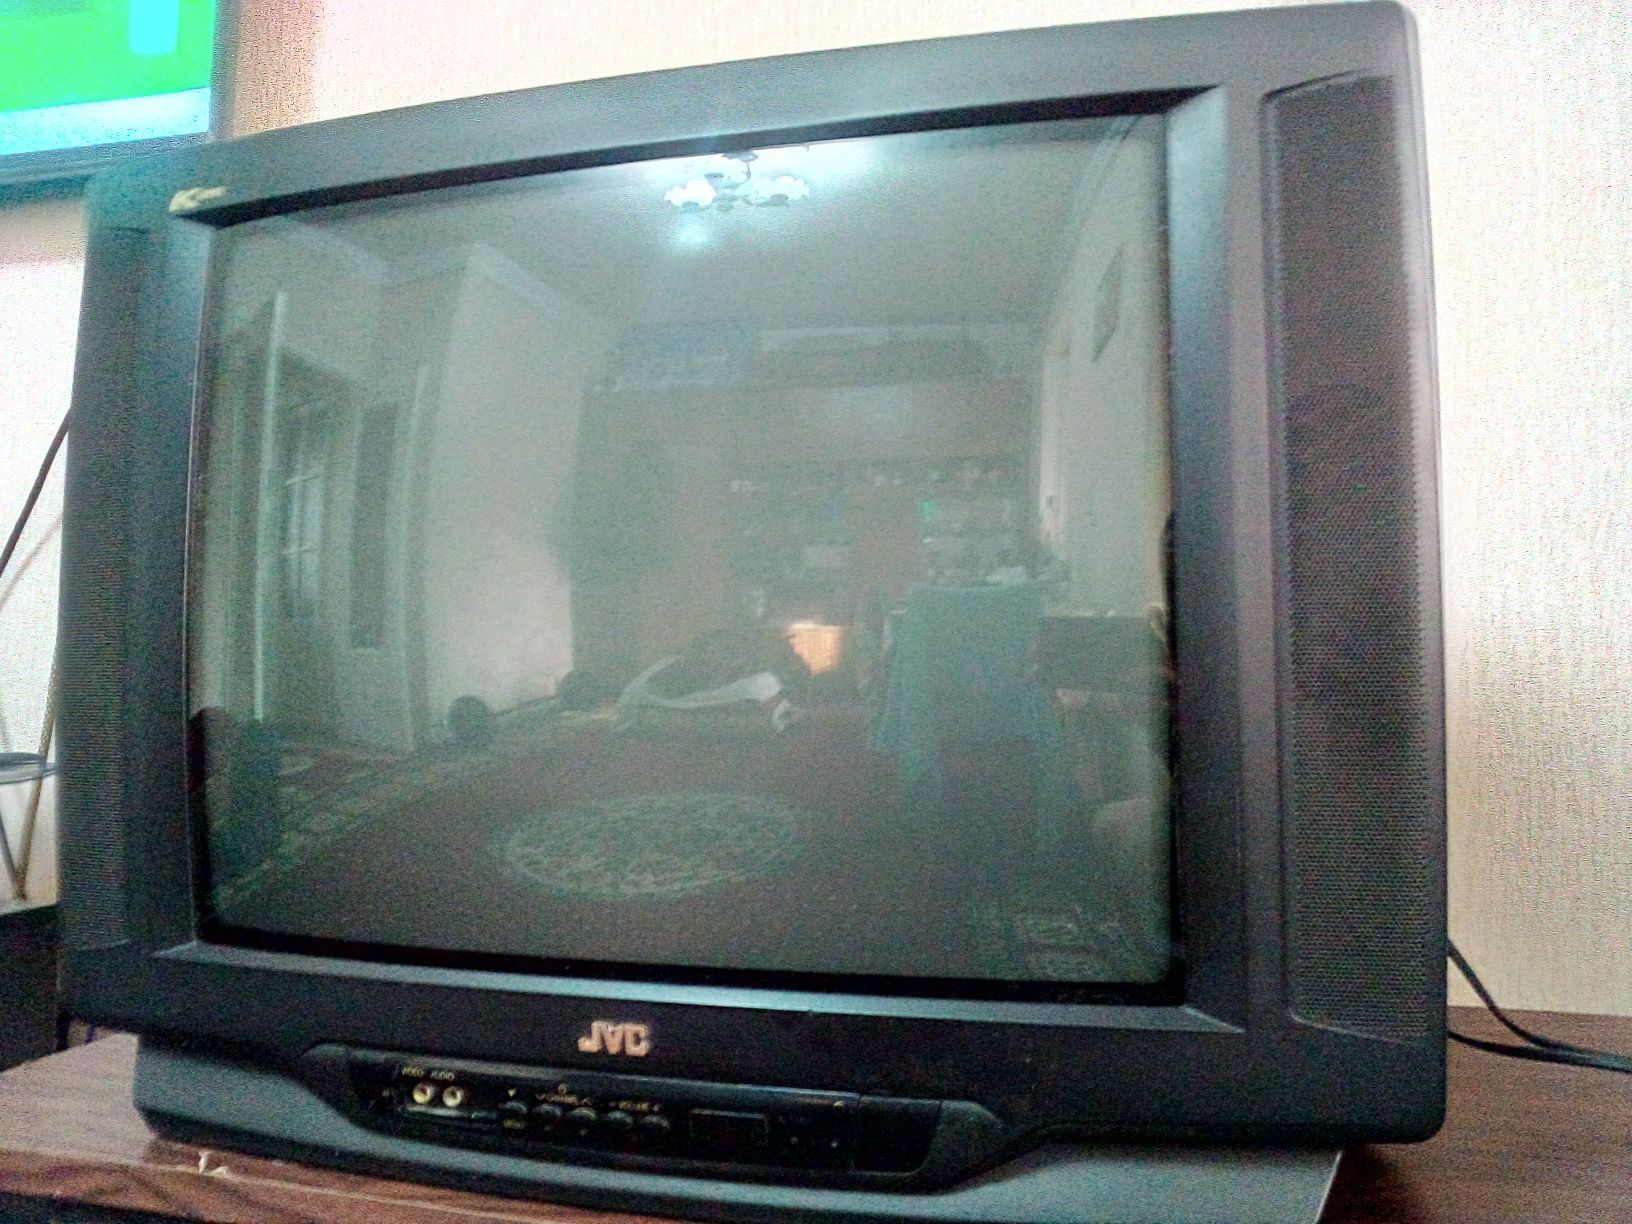 Телевизор JVC 54 диагональ